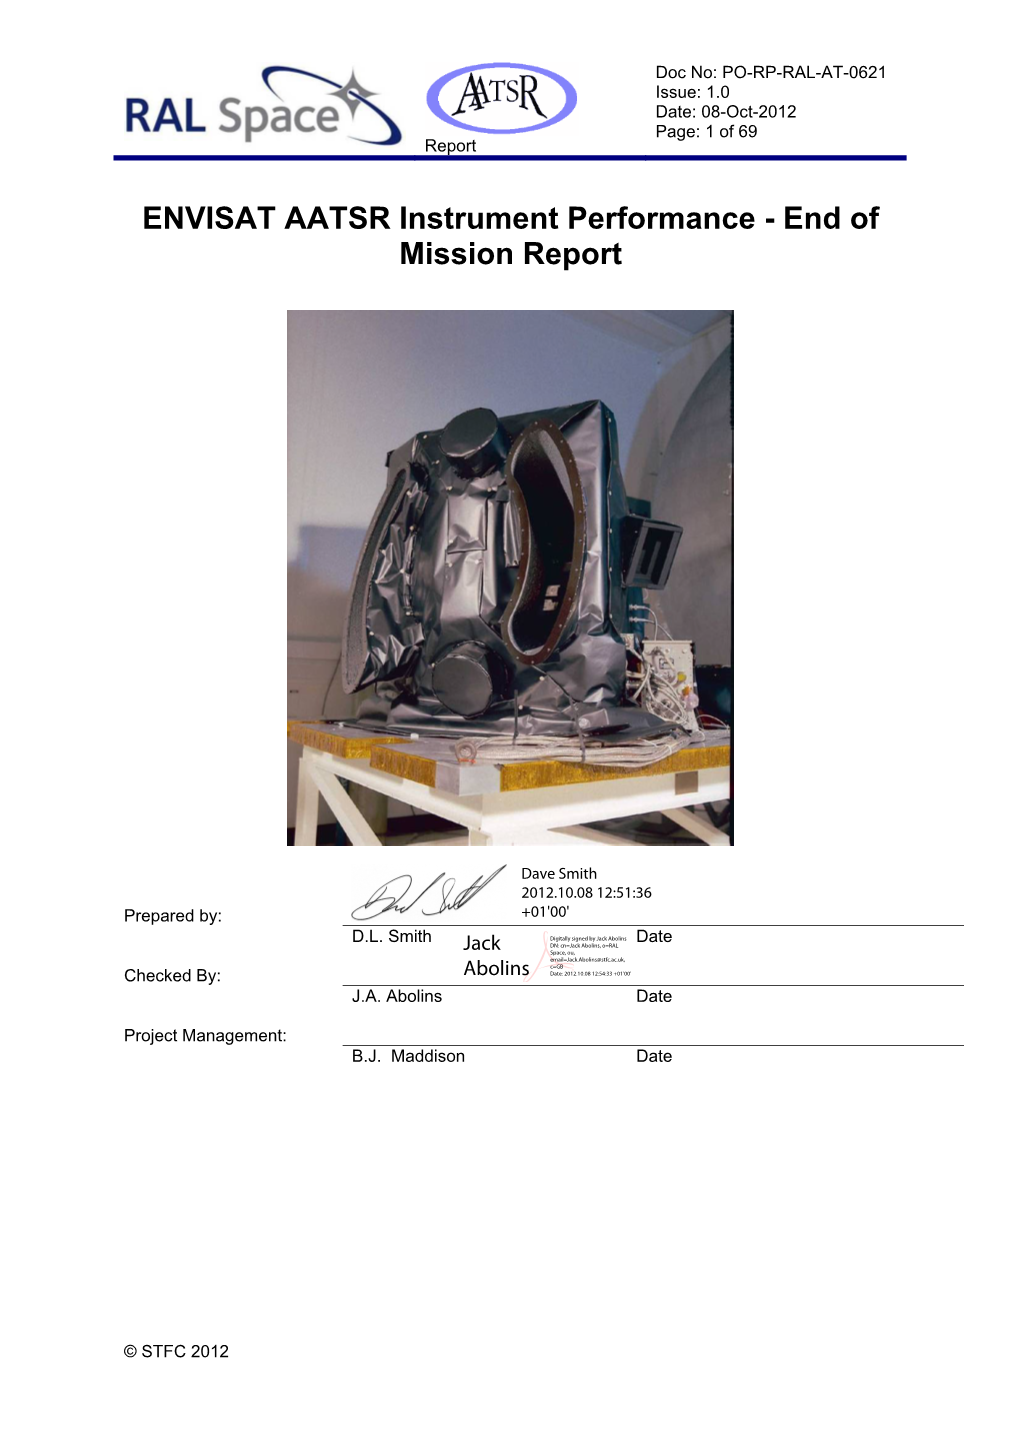 ENVISAT AATSR Instrument Performance - End of Mission Report